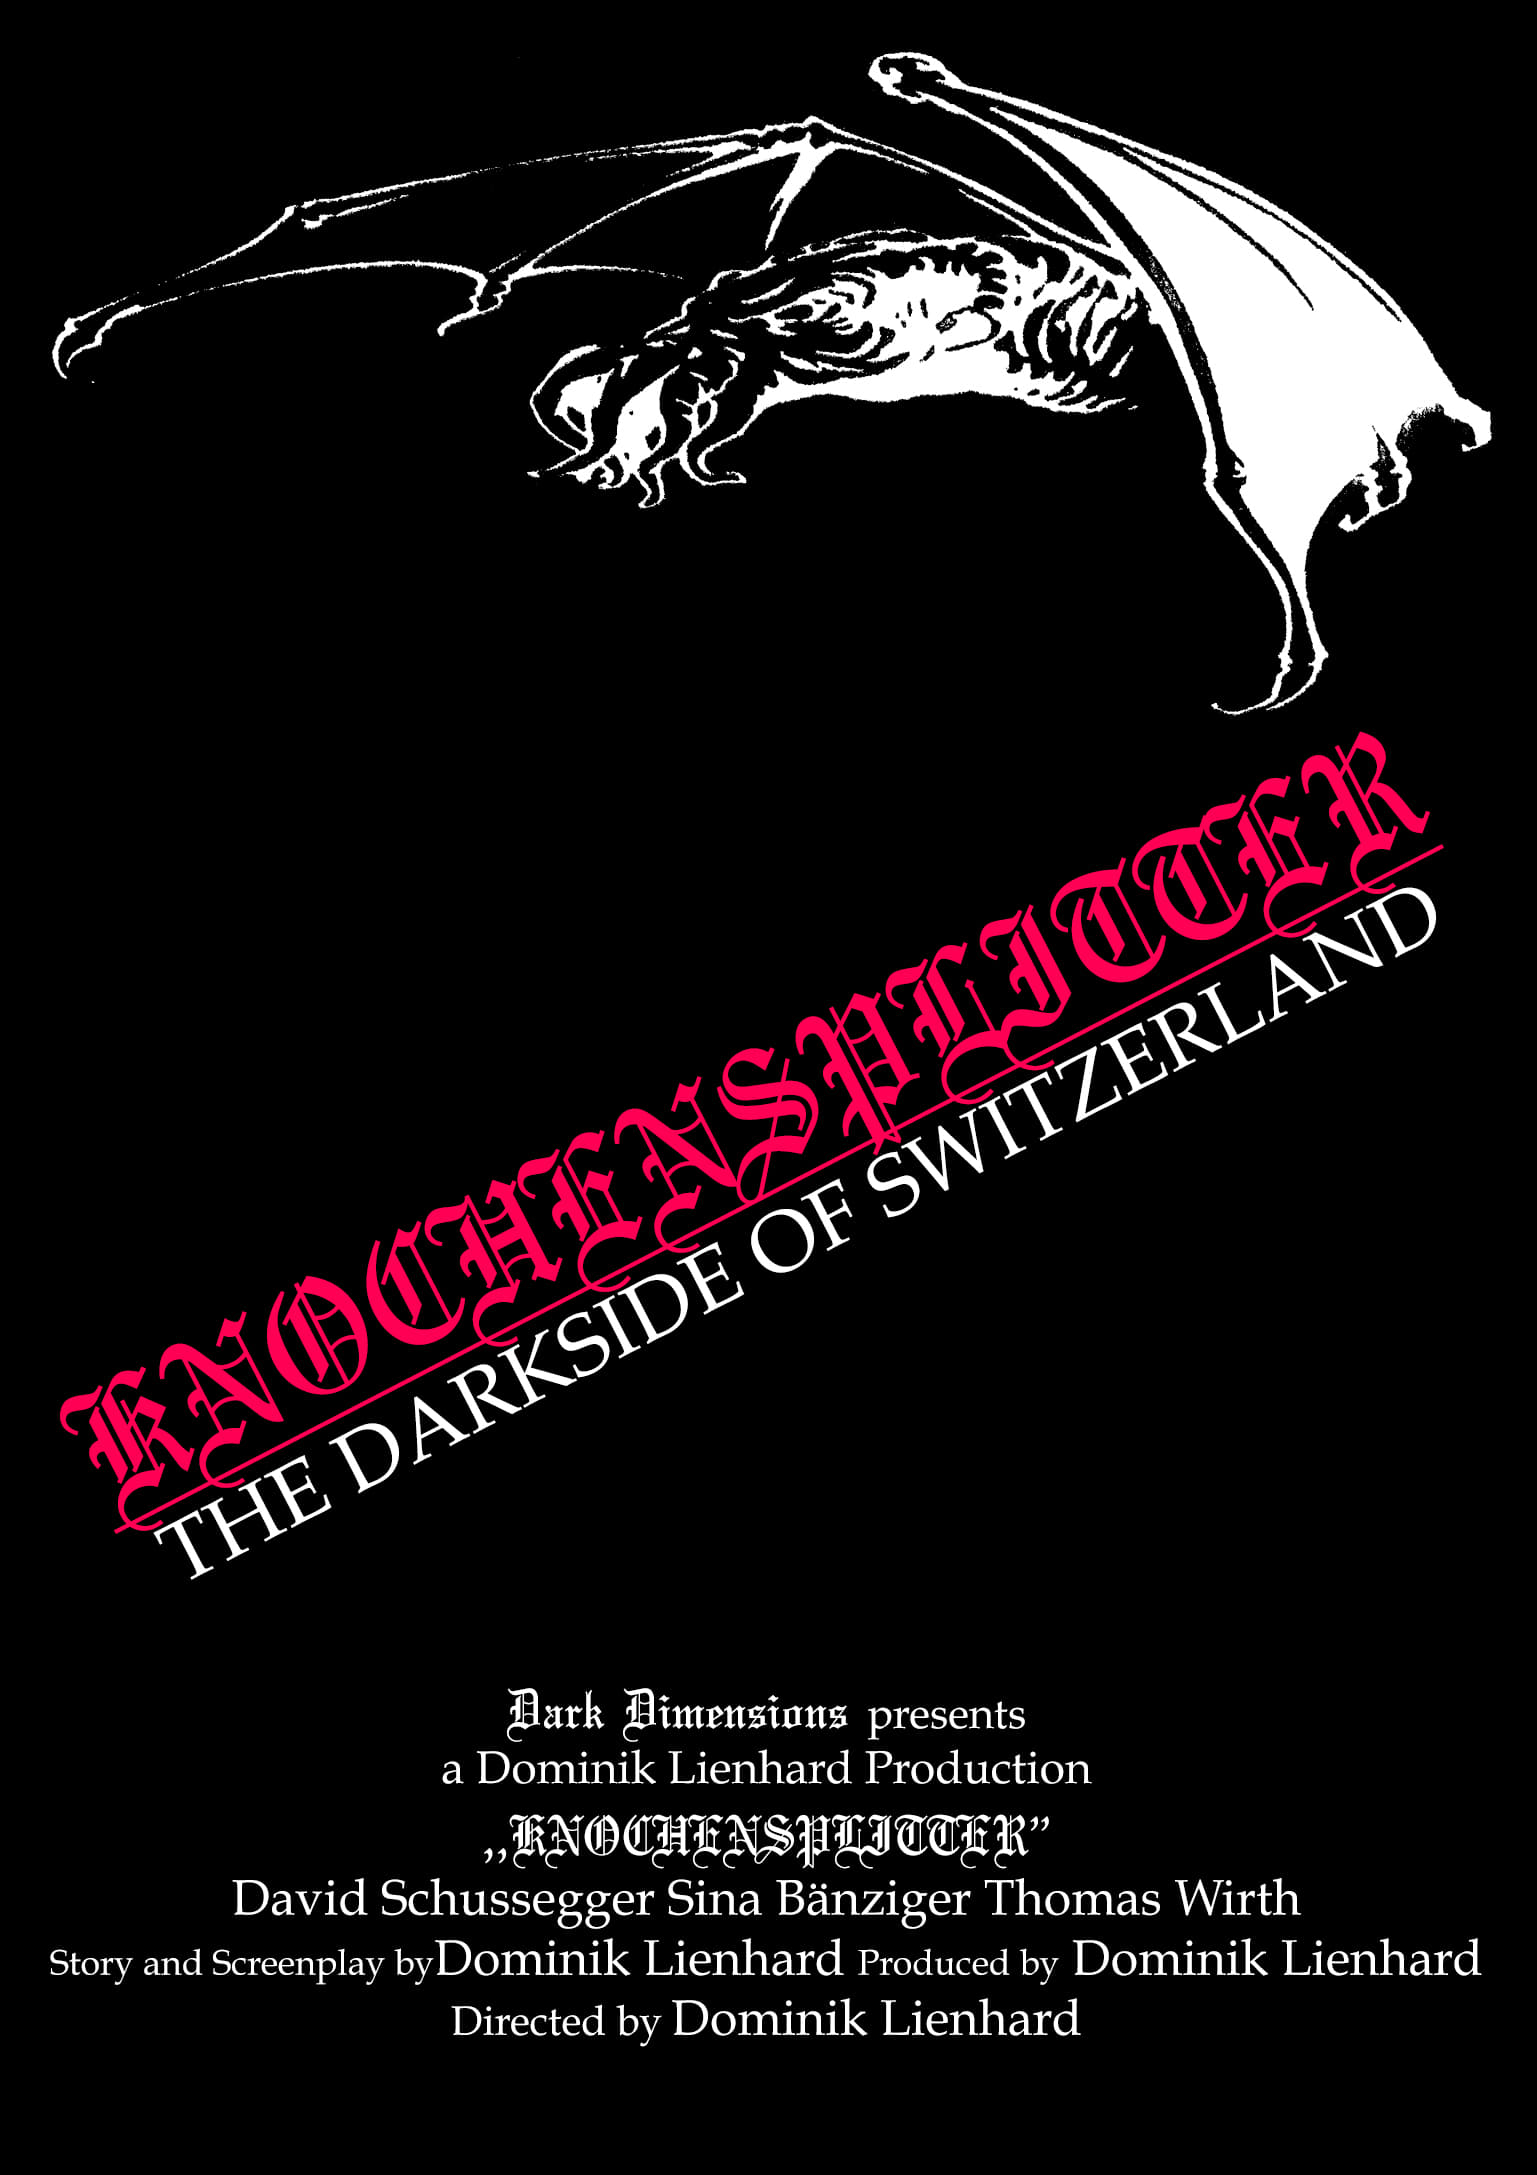 Knochensplitter - The Dark Side of Switzerland